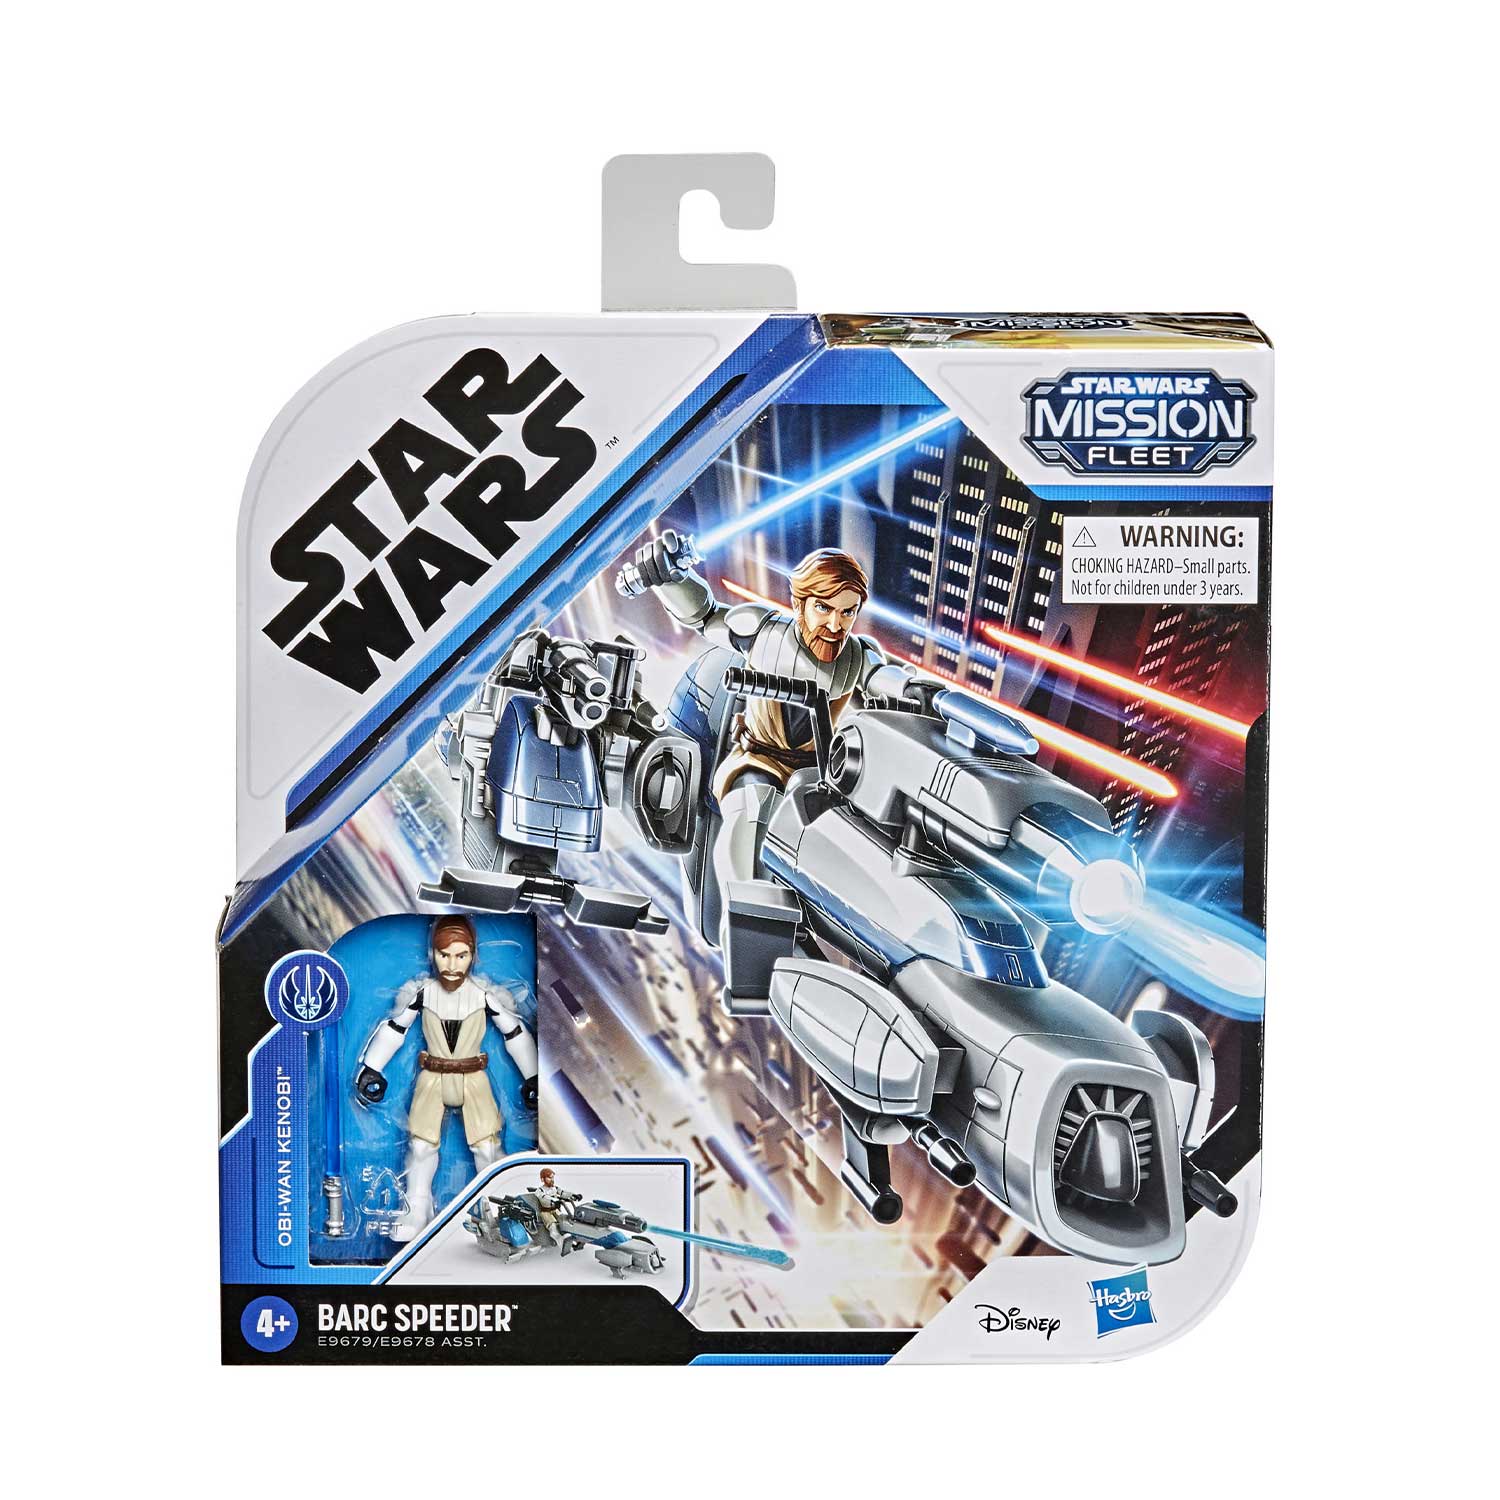 Star Wars Mission Fleet Expedition Class Obi-Wan Kenobi Jedi Speeder Chase 2.5-Inch-Scale Figure and Vehicle - Mod: HSBE96795L0